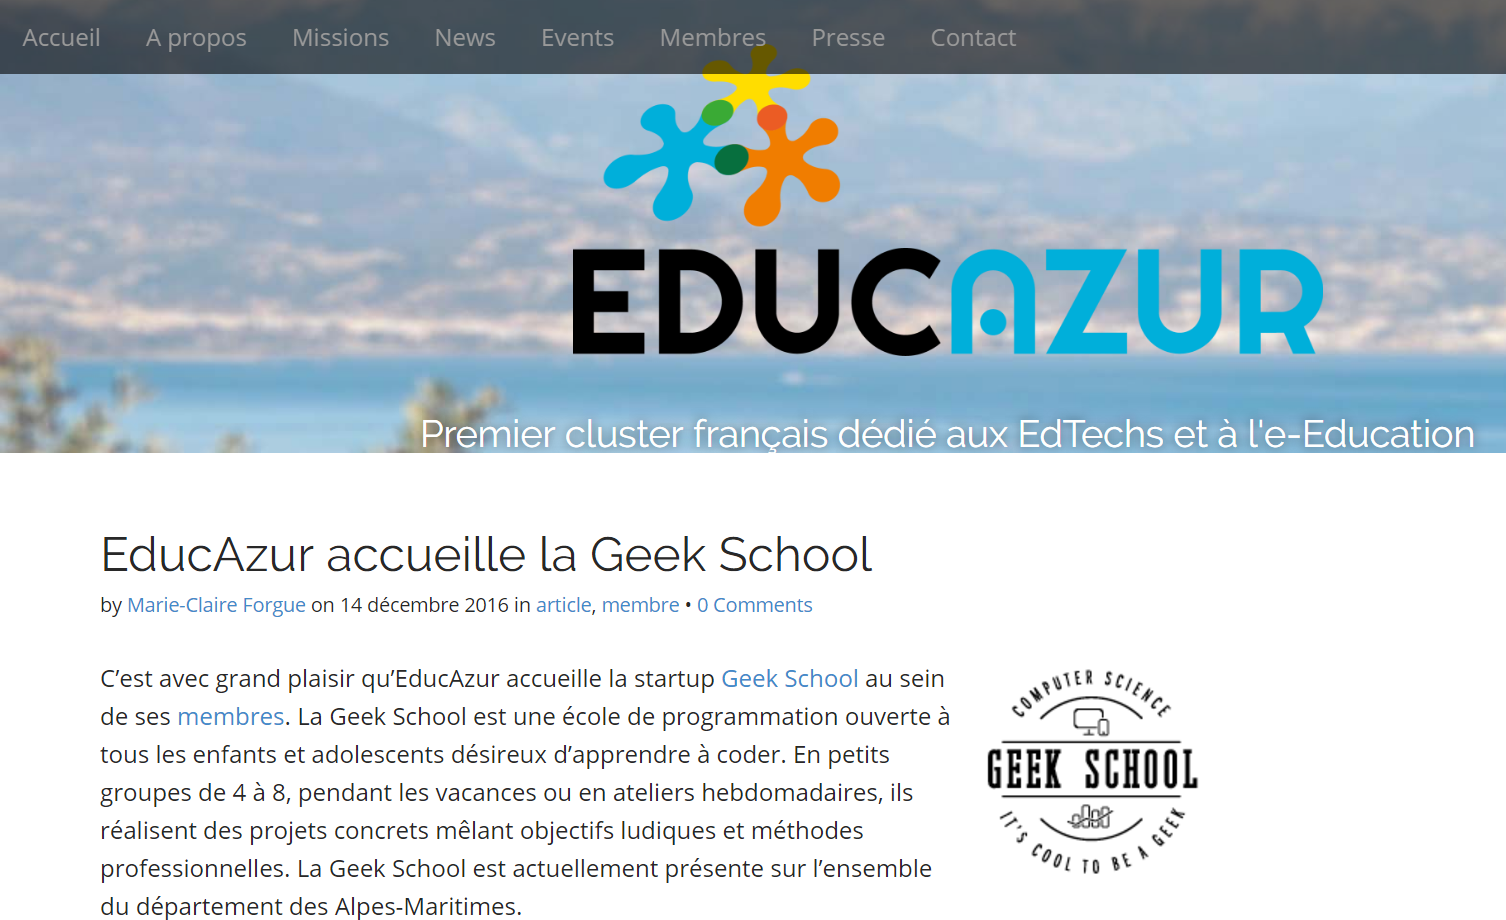 EducAzur accueille la Geek School